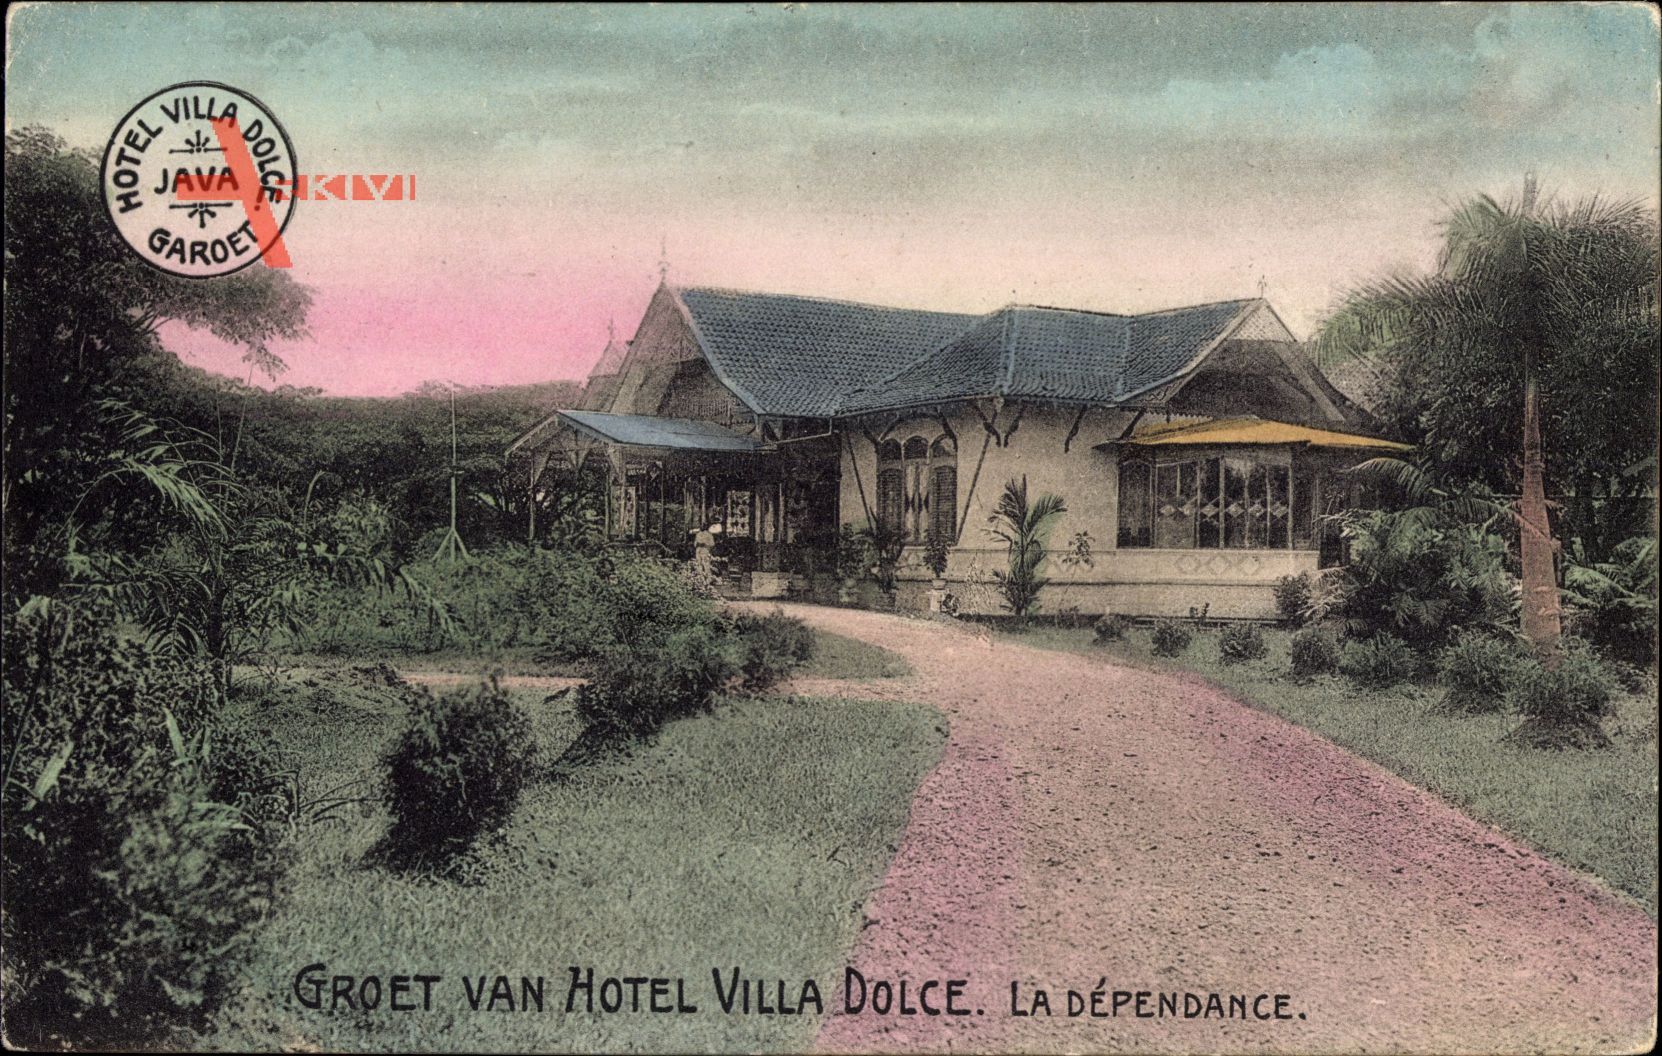 Indonesien, Groet van Hotel Villa Dolce, Dépendance